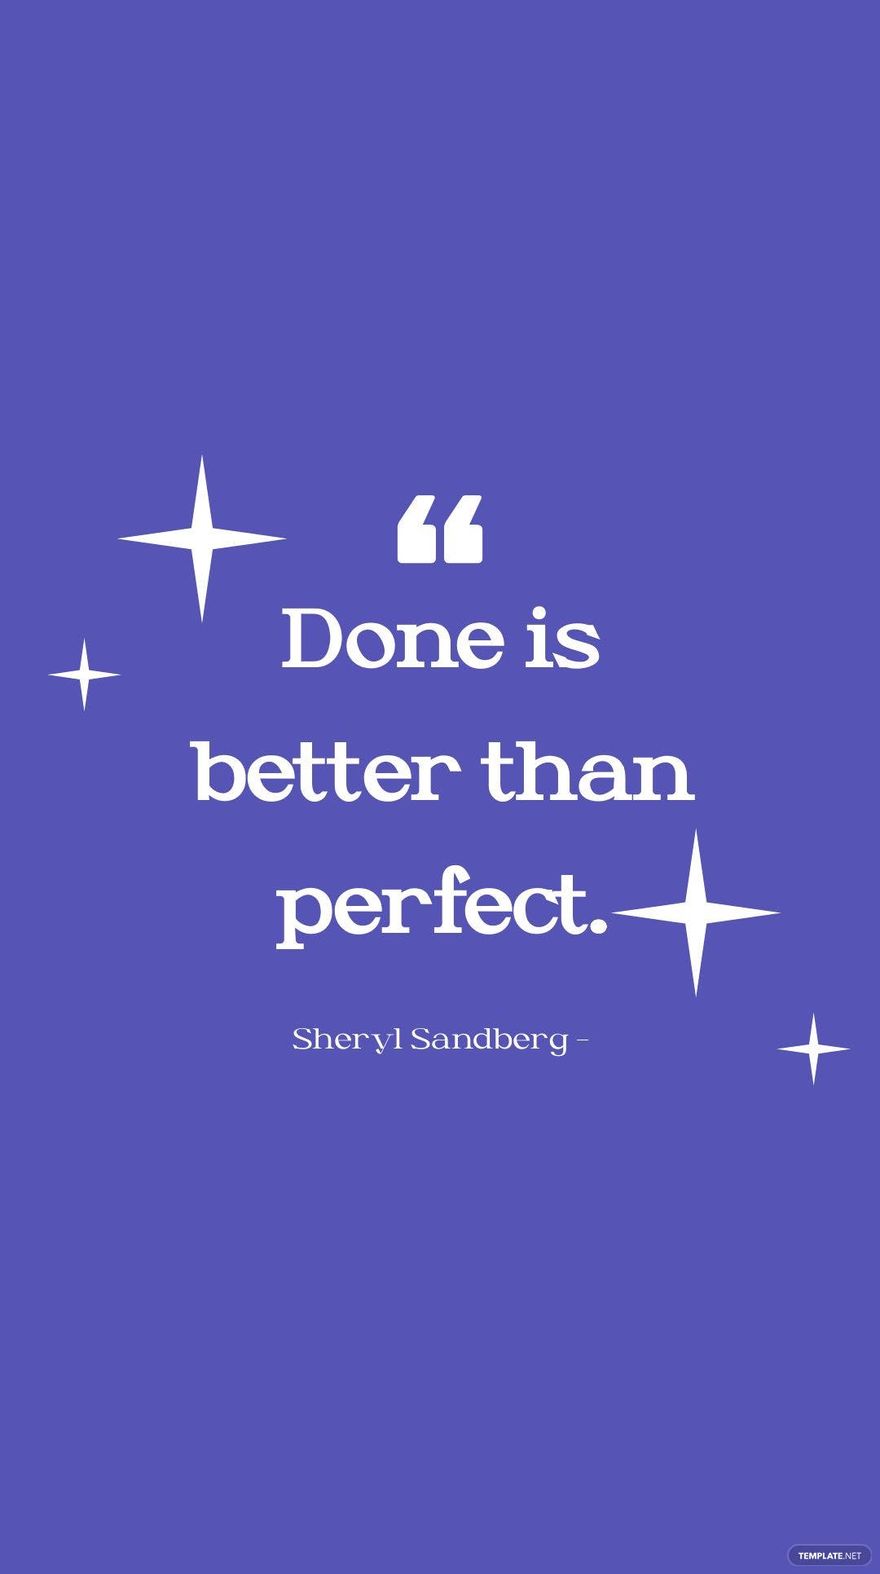 Sheryl Sandberg - Done is better than perfect.